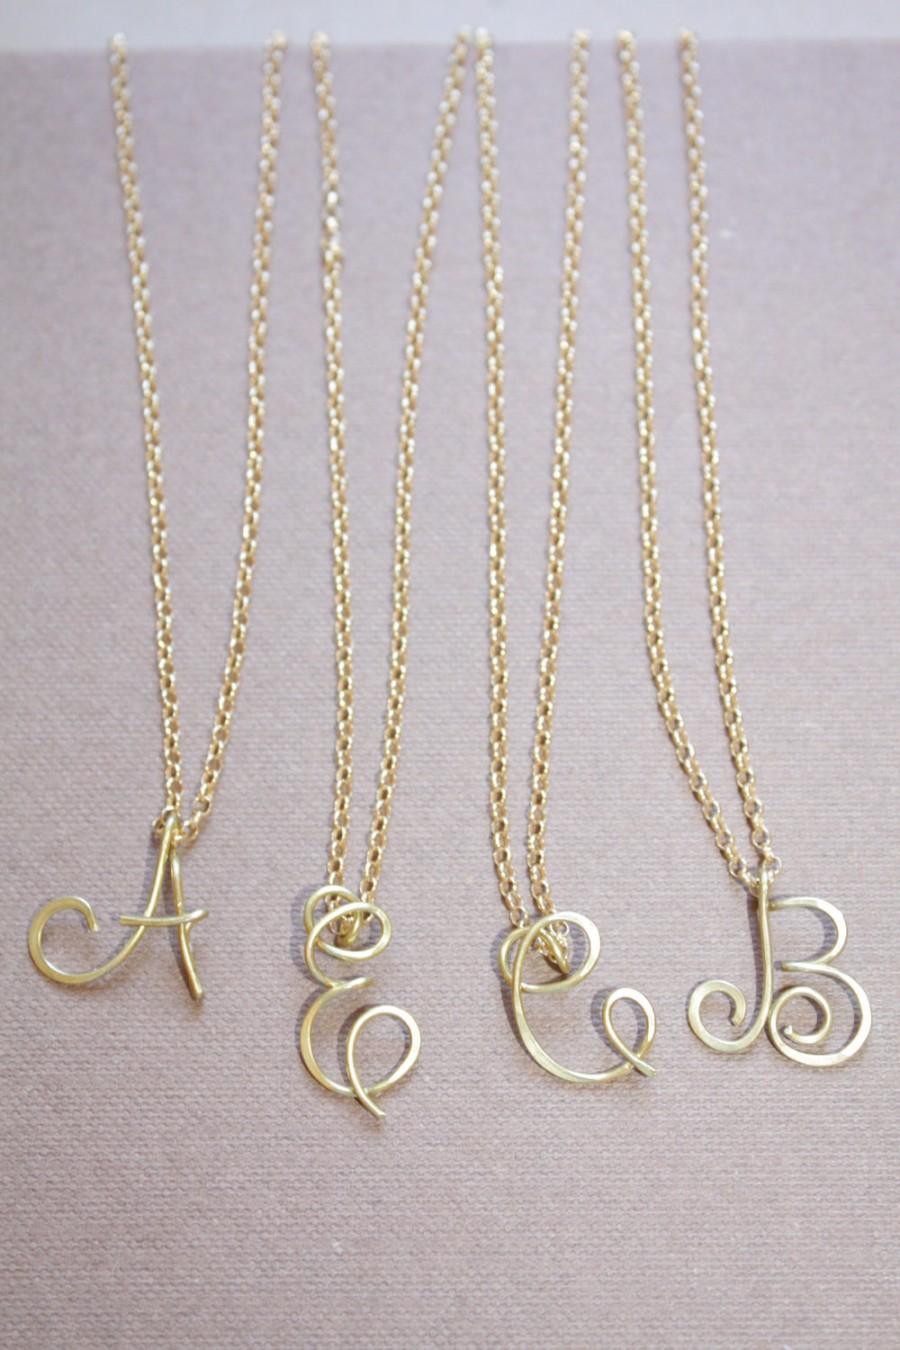 Свадьба - Uppercase Initial Letter Necklace Personalized Cursive Letter Necklace Gold Letter Necklace Silver Initial Necklace Cursive Letter Di&De